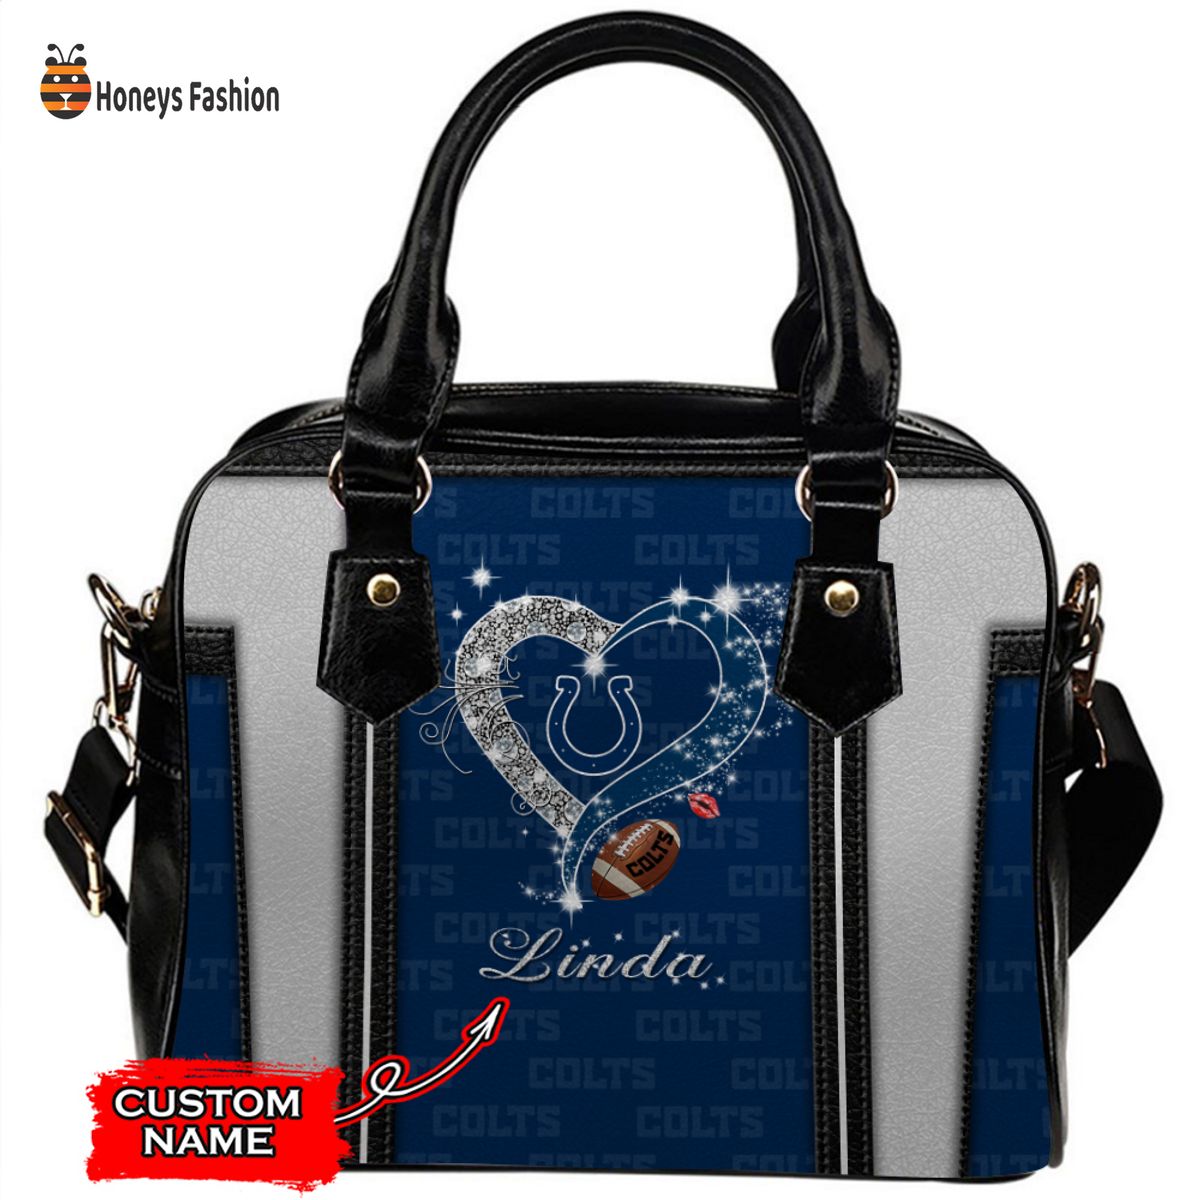 Indianapolis Colts NFL Custom Name Leather Handbag Tote bag